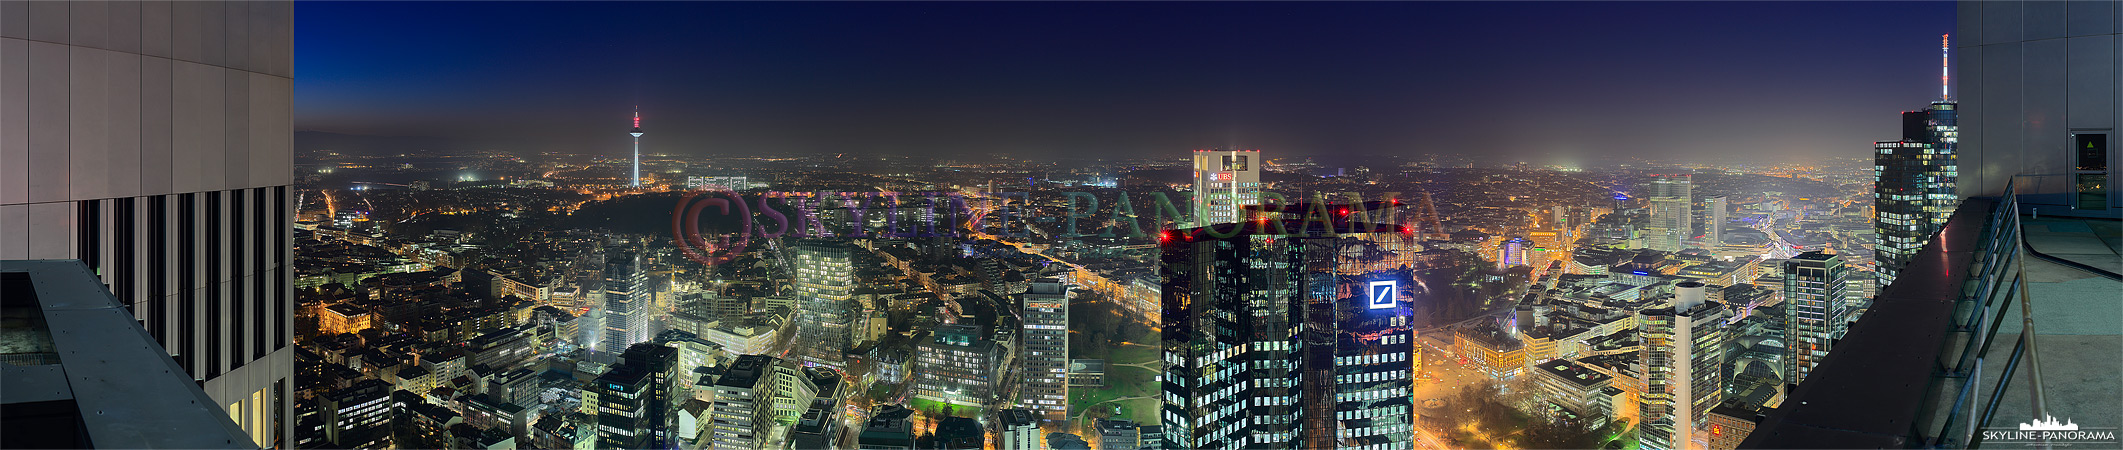 Frankfurt bei Nacht (p_00574)